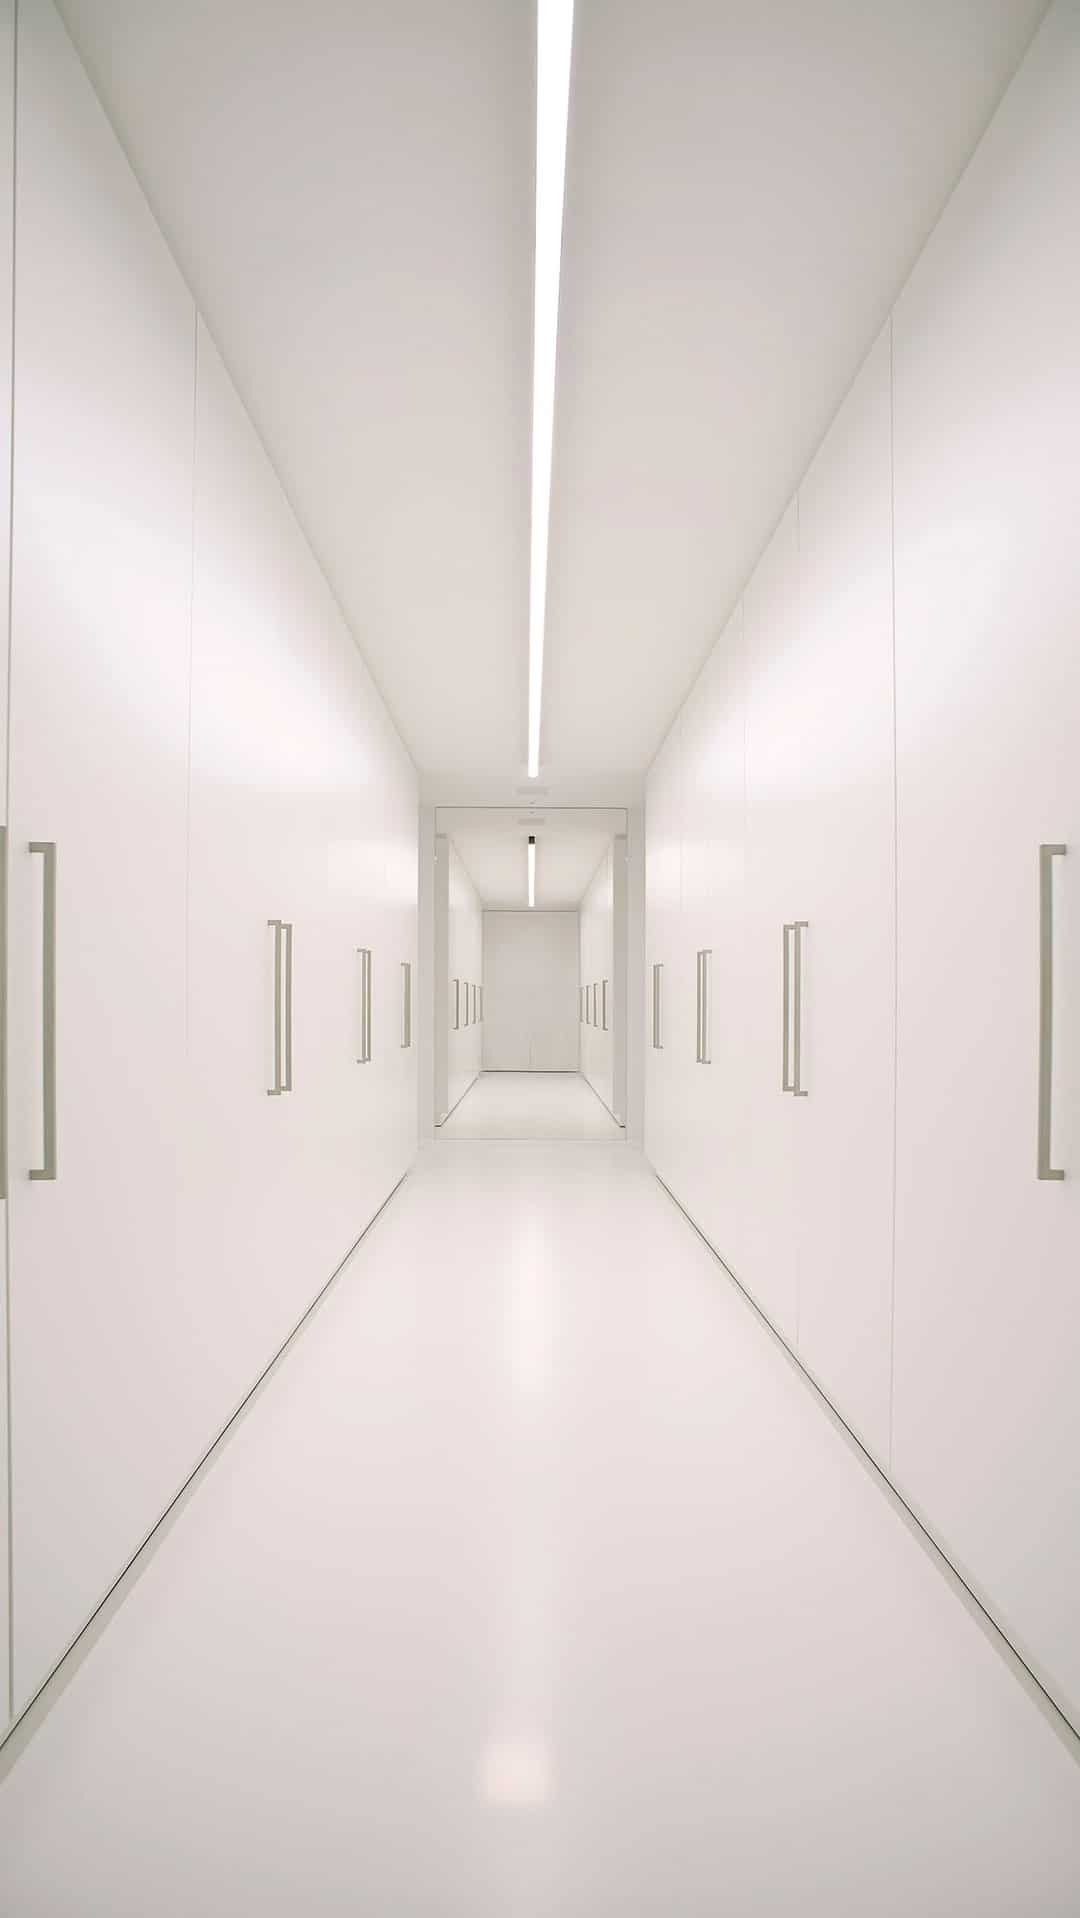 Stratum Resin Flooring - Bolidtop 525 resin floor - residential